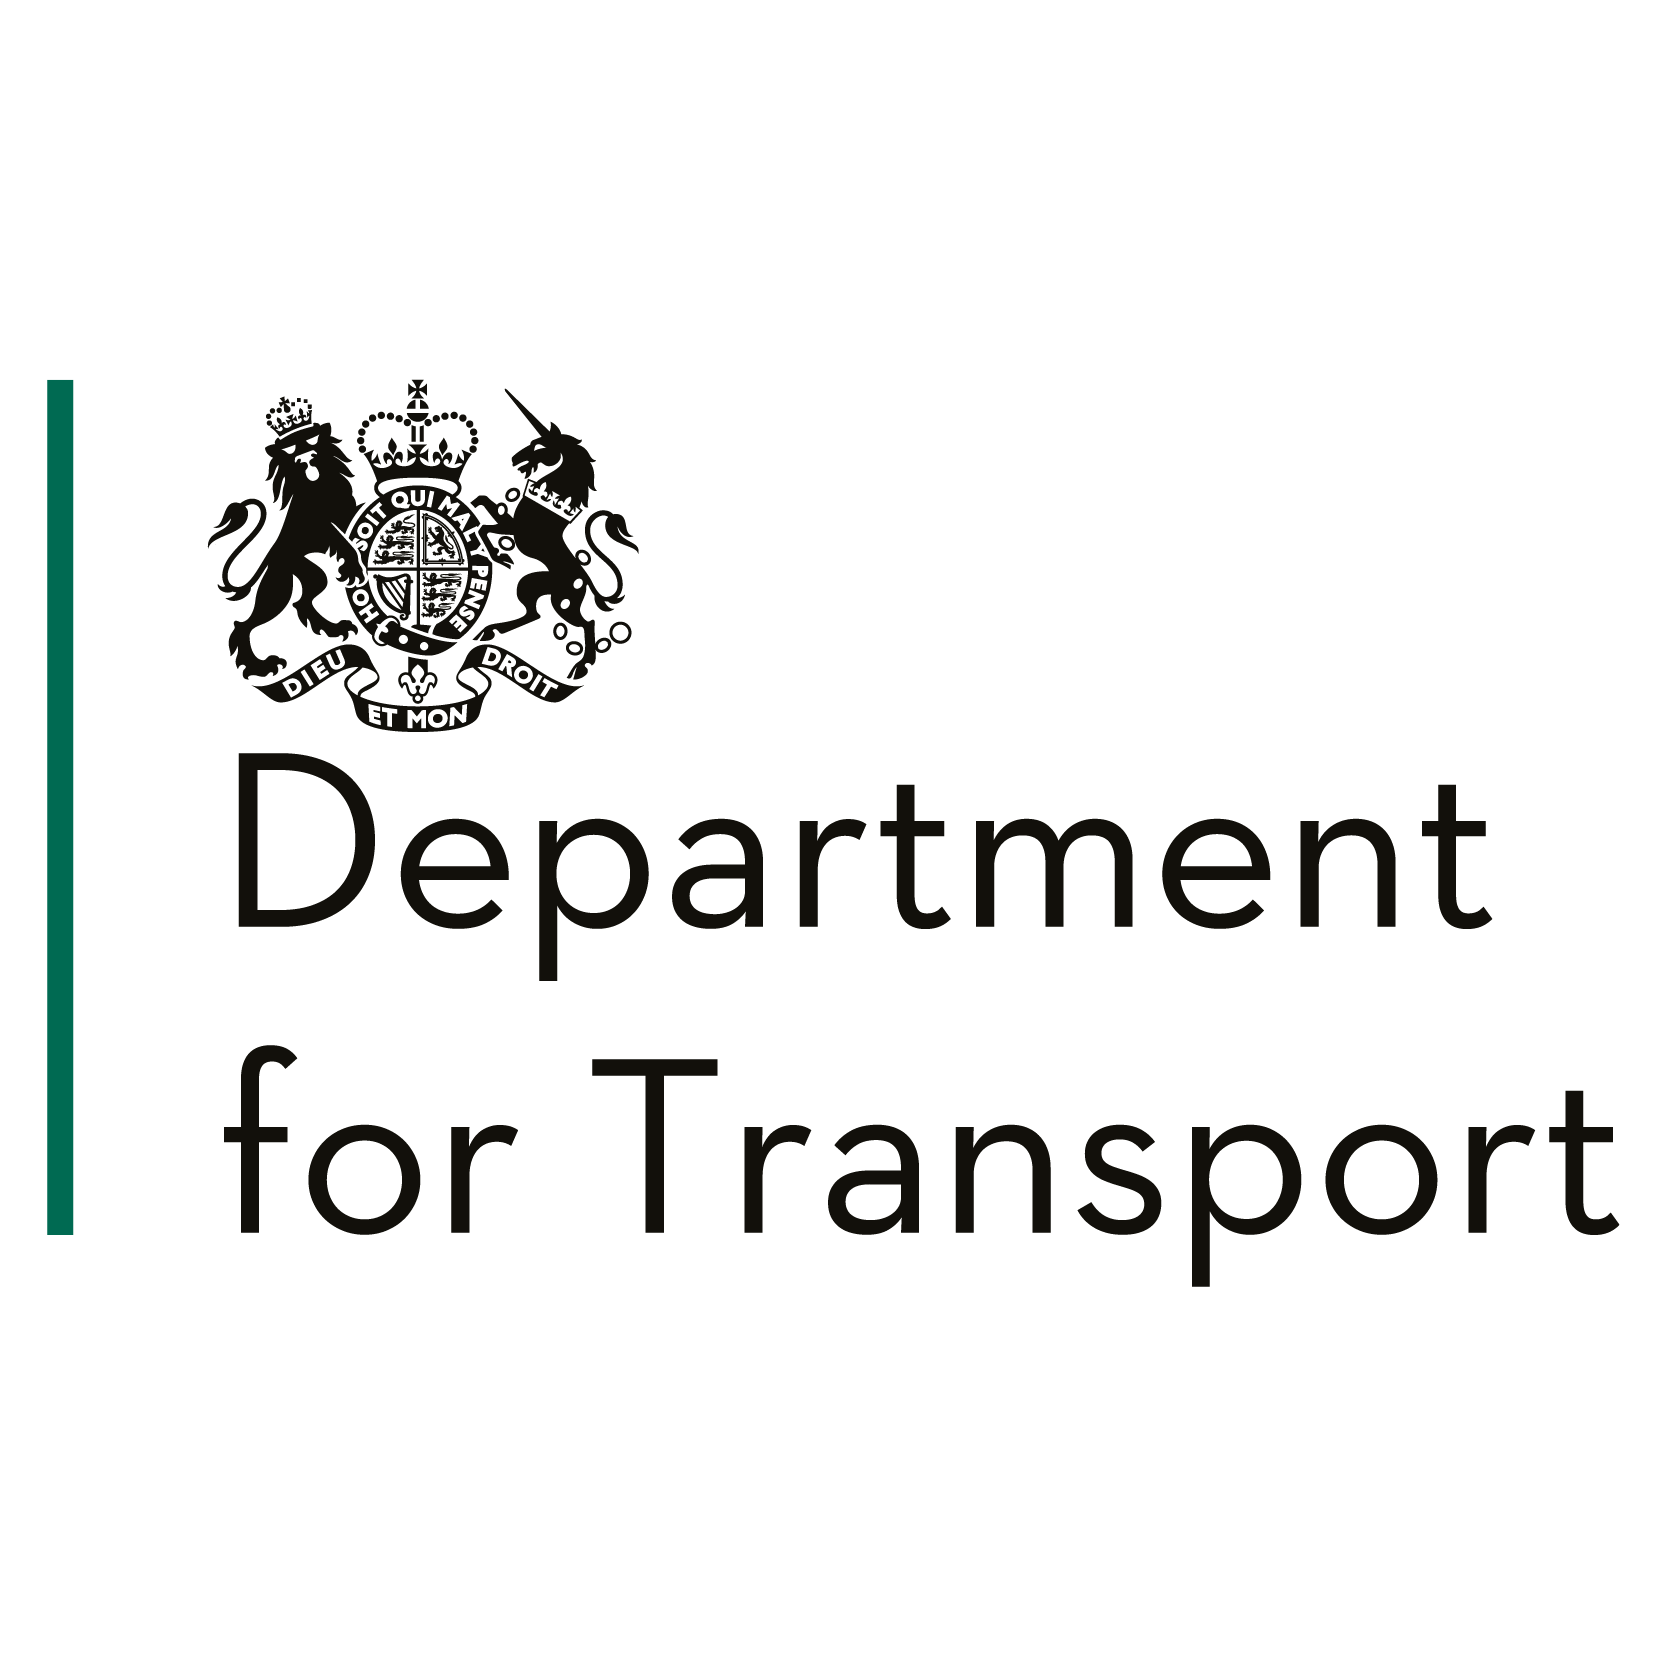 UK's Department for transport